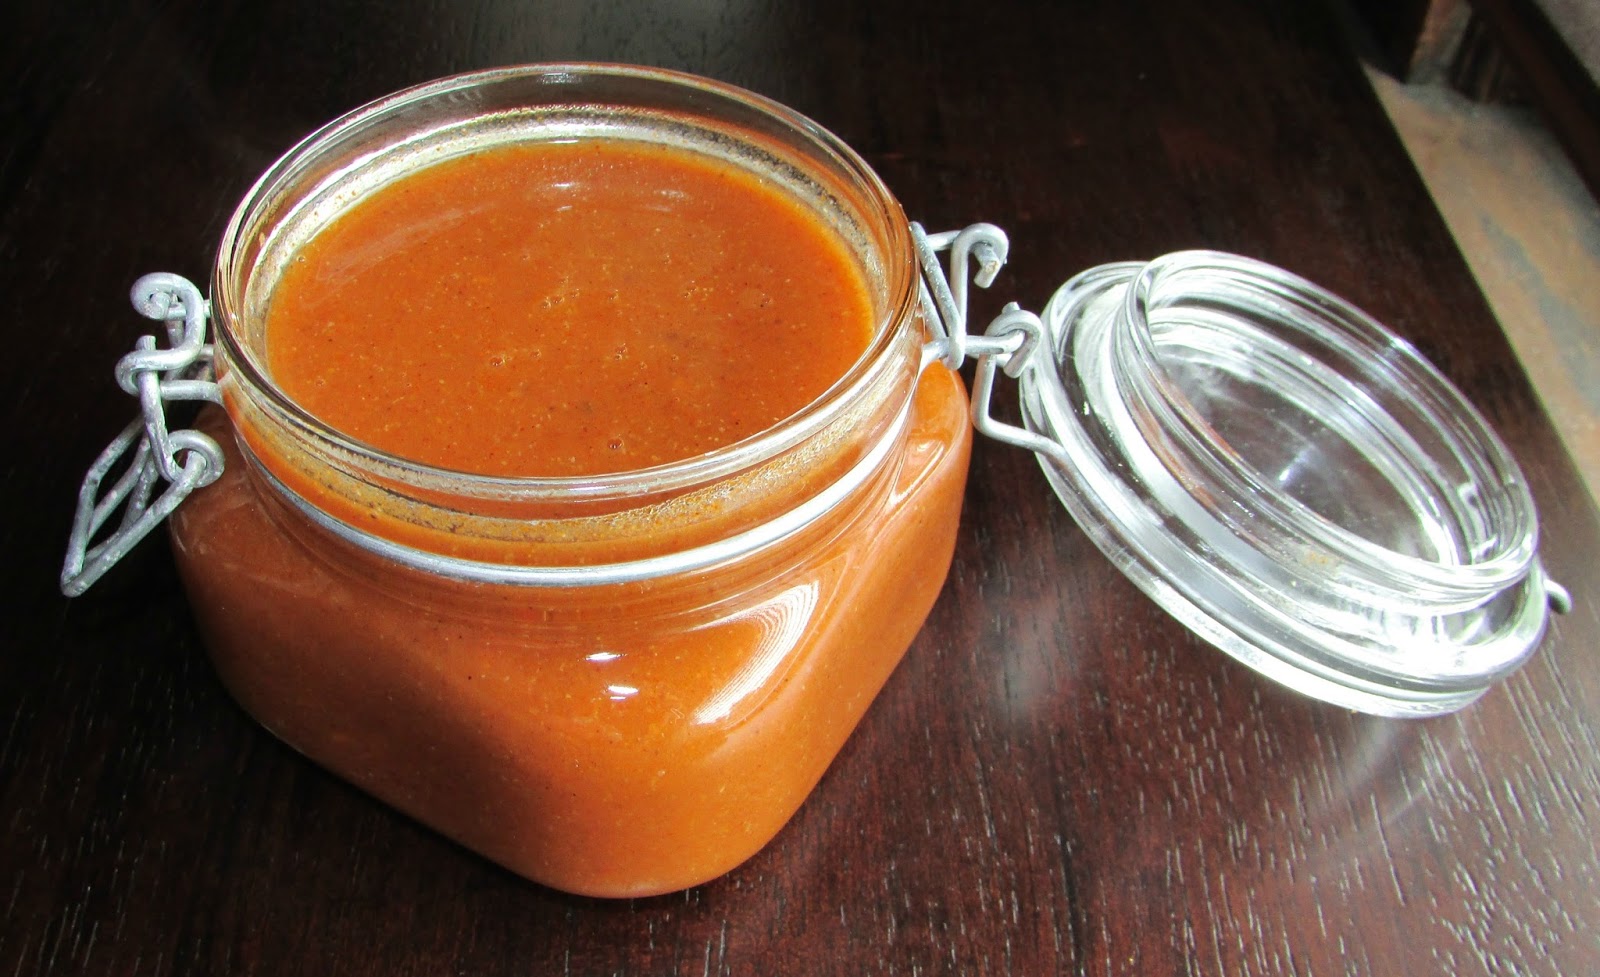 Open jar of homemade enchilada sauce showing red tomato based goodness inside.